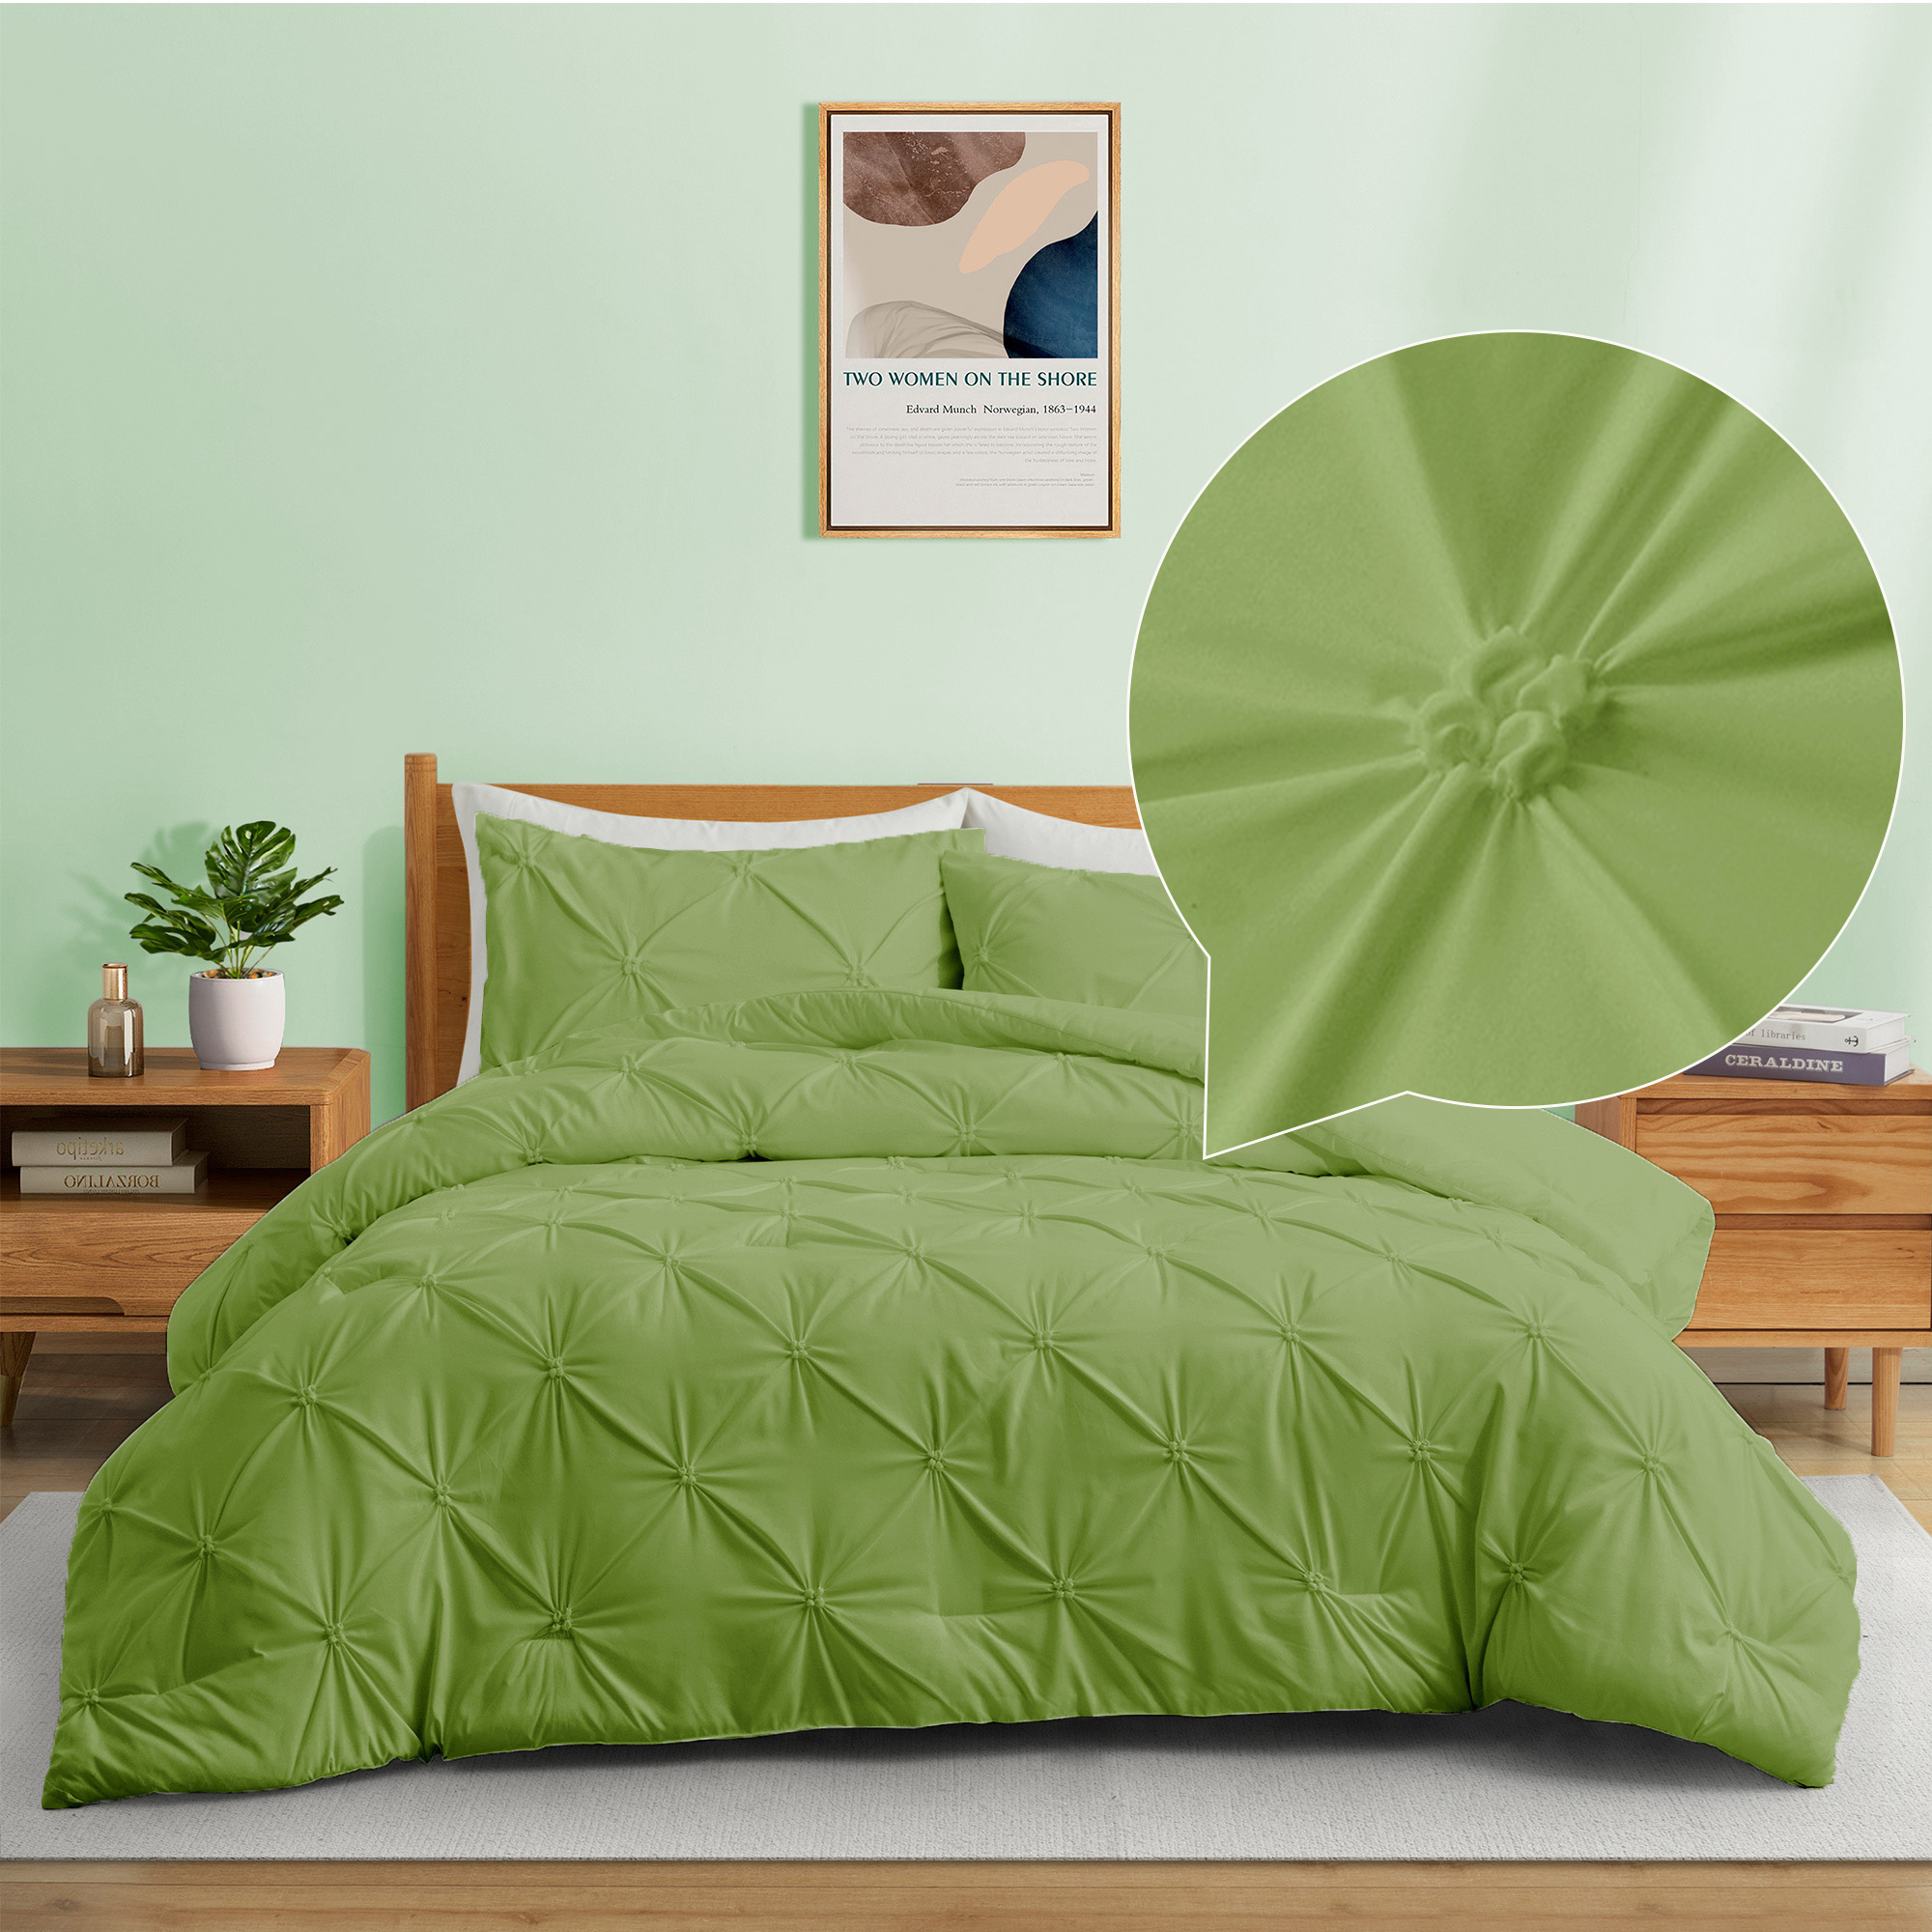 All Seasons Down Alternative Comforter Set, Pinch Pleat Design - Olive Green, Full/Queen